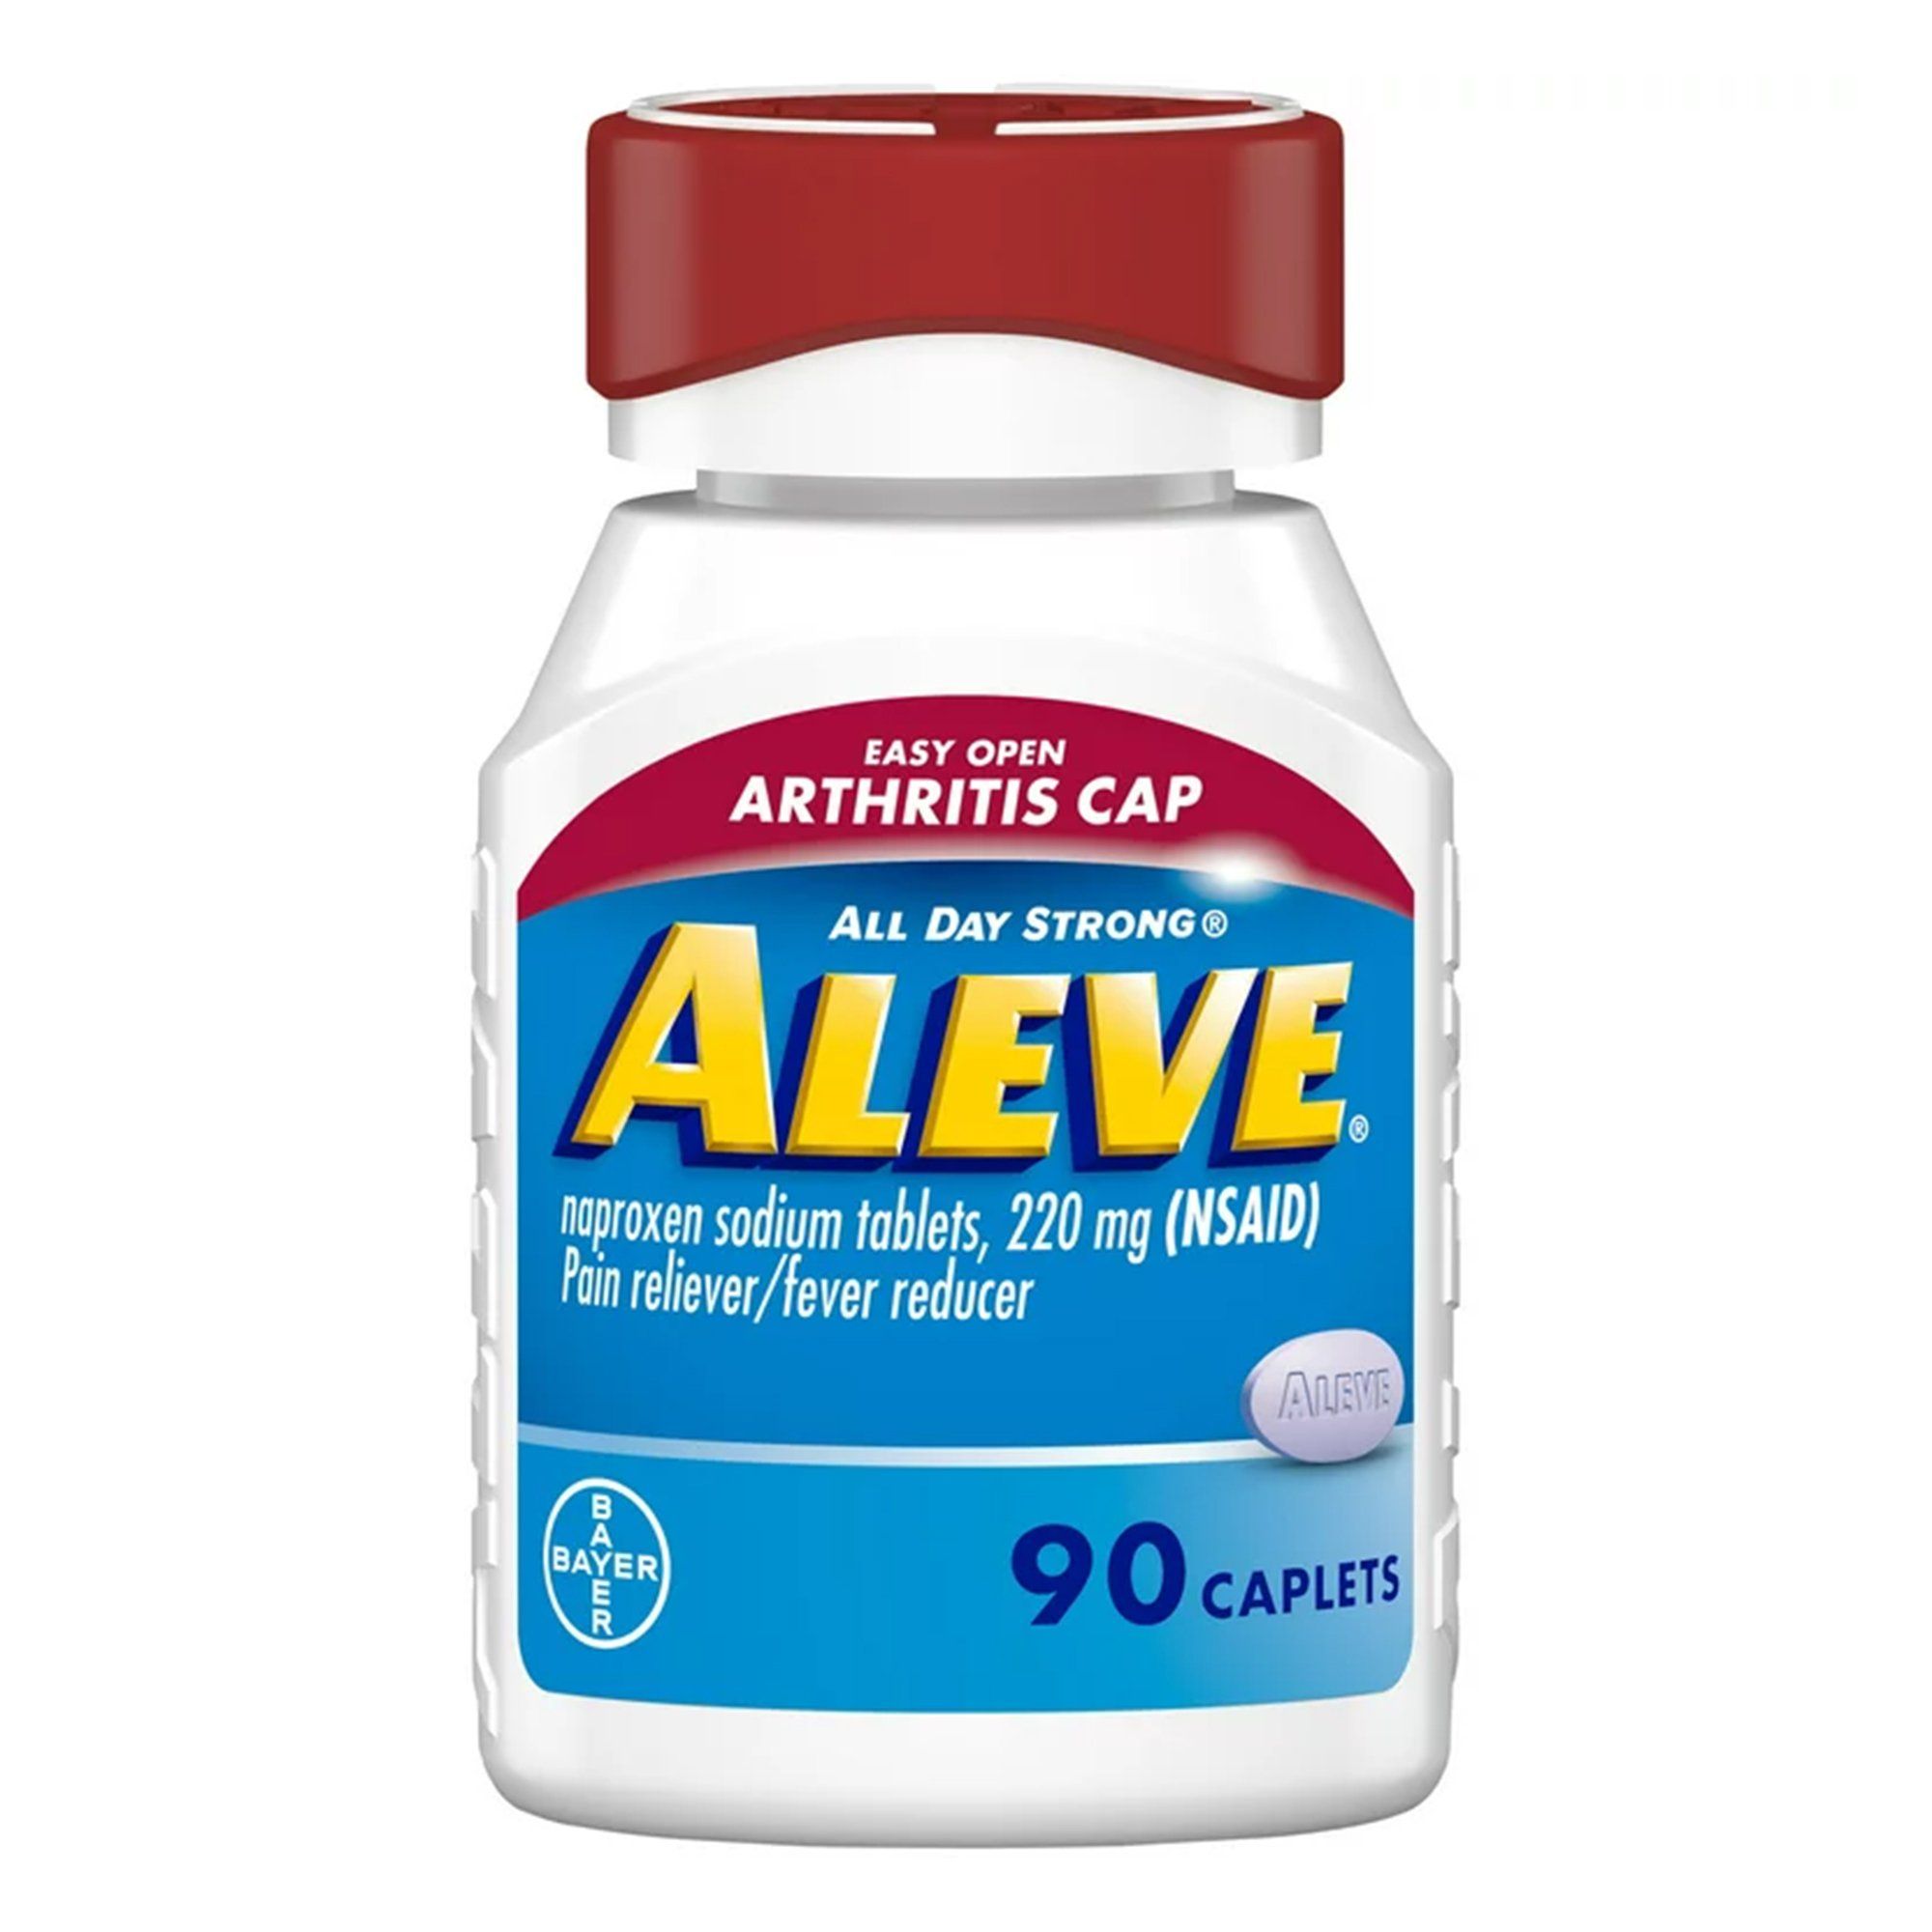 Aleve Arthritis Cap Naproxen Sodium Pain Reliever Caplets, 220 mg - 90 ct